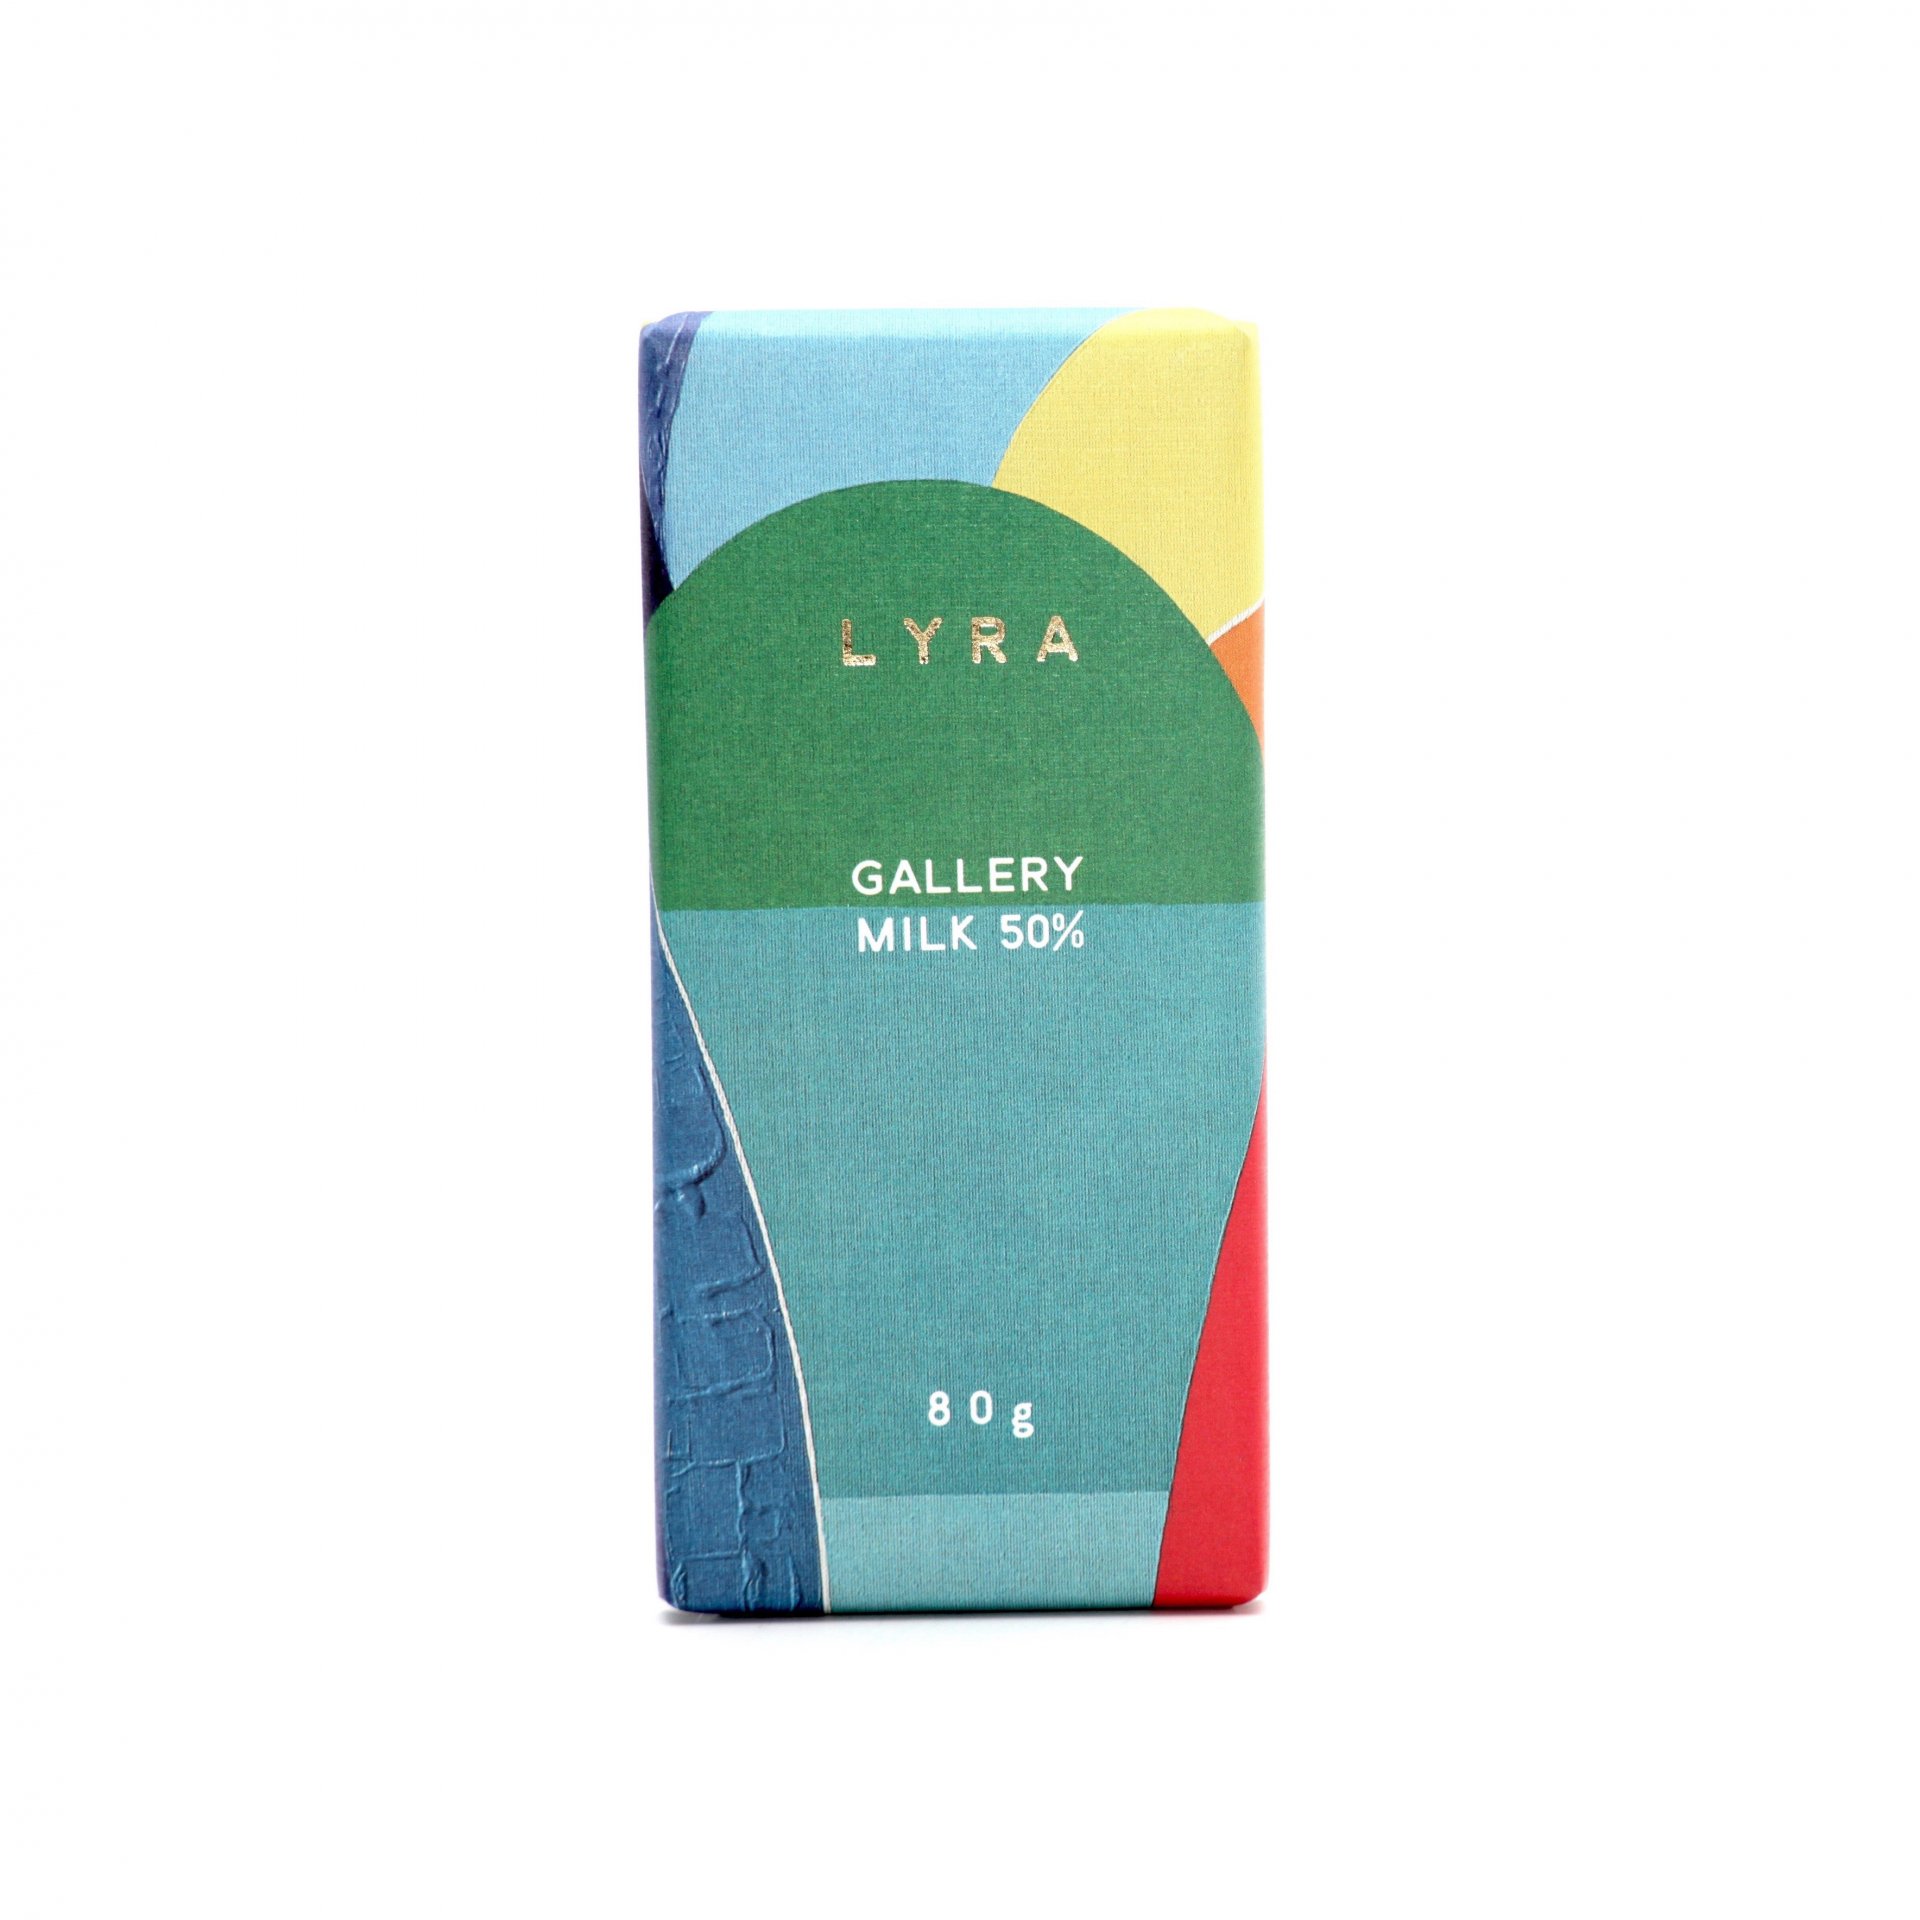 Lyra Gallery Milk 50% 80g